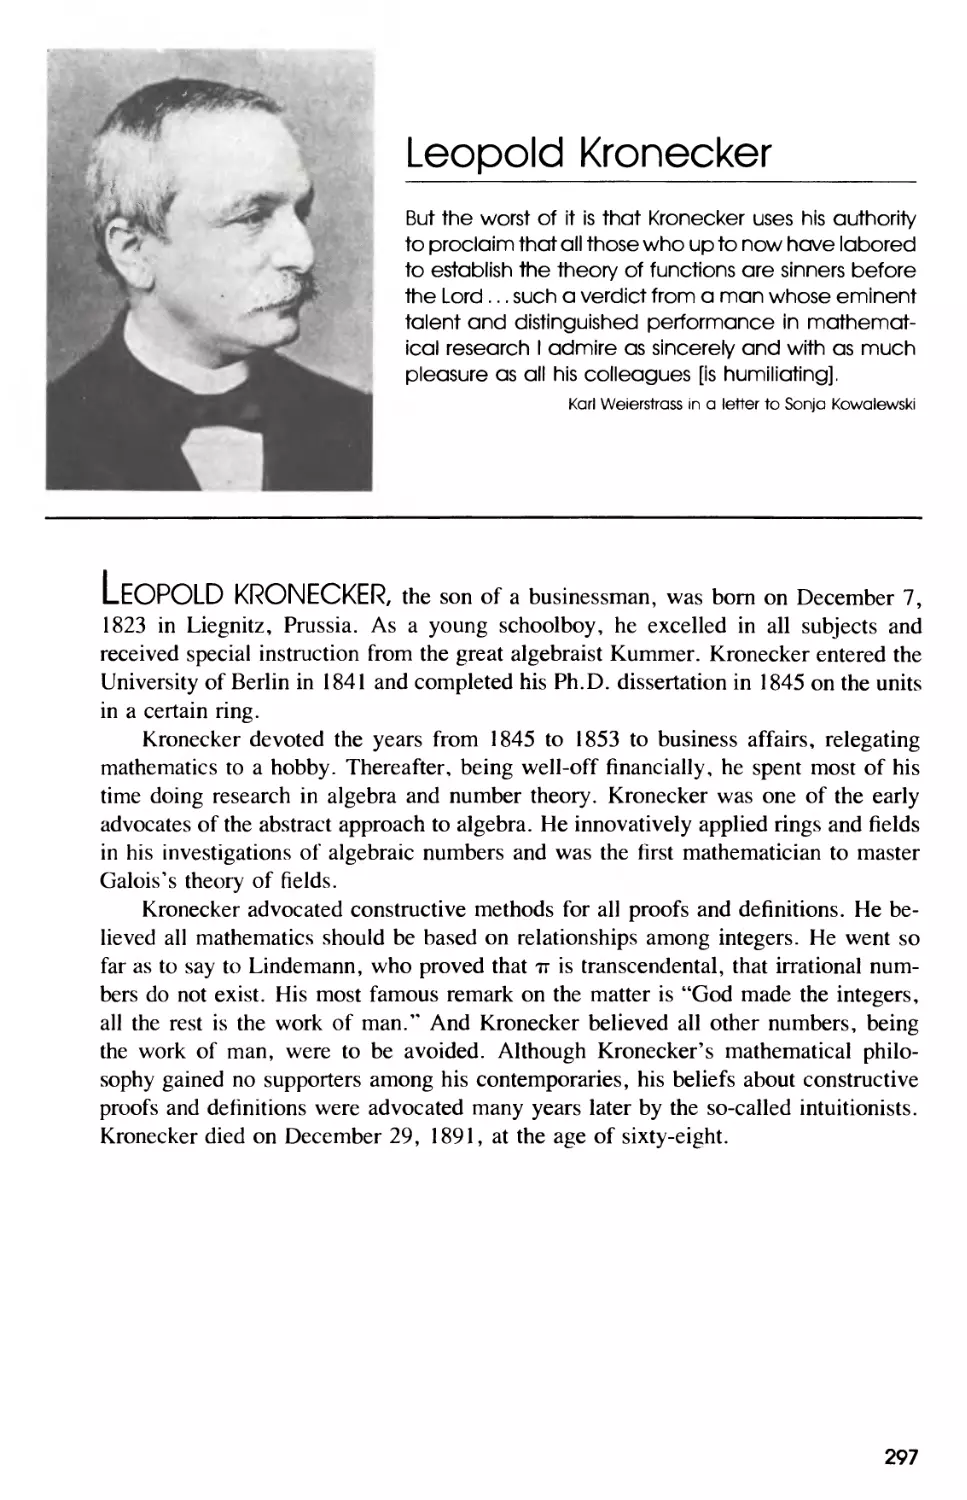 Biography of Leopold Kronecker